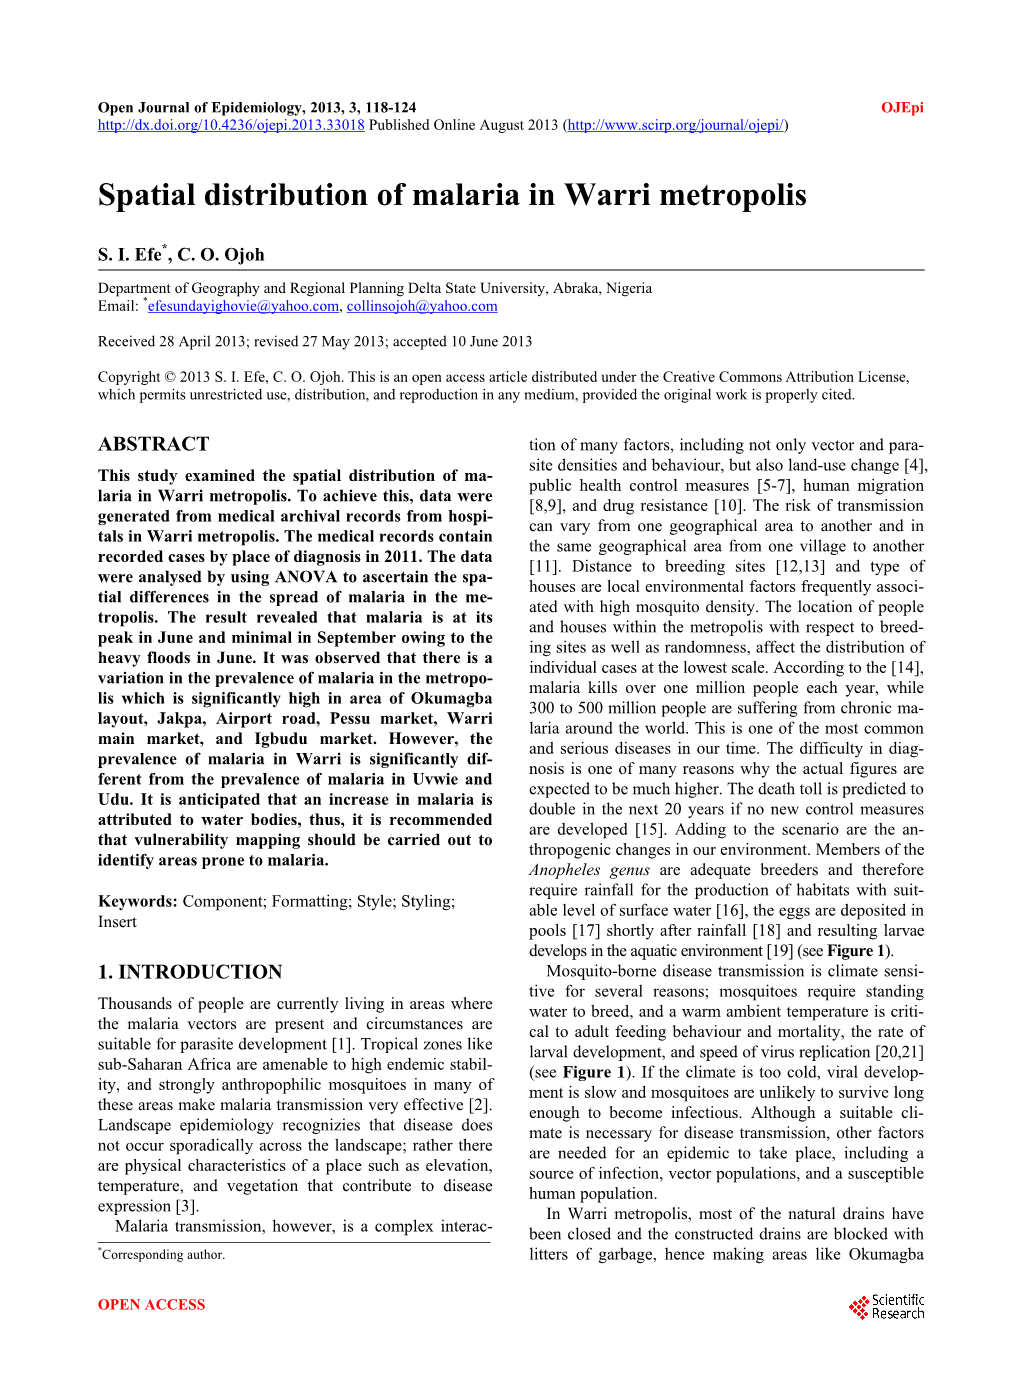 Spatial Distribution of Malaria in Warri Metropolis